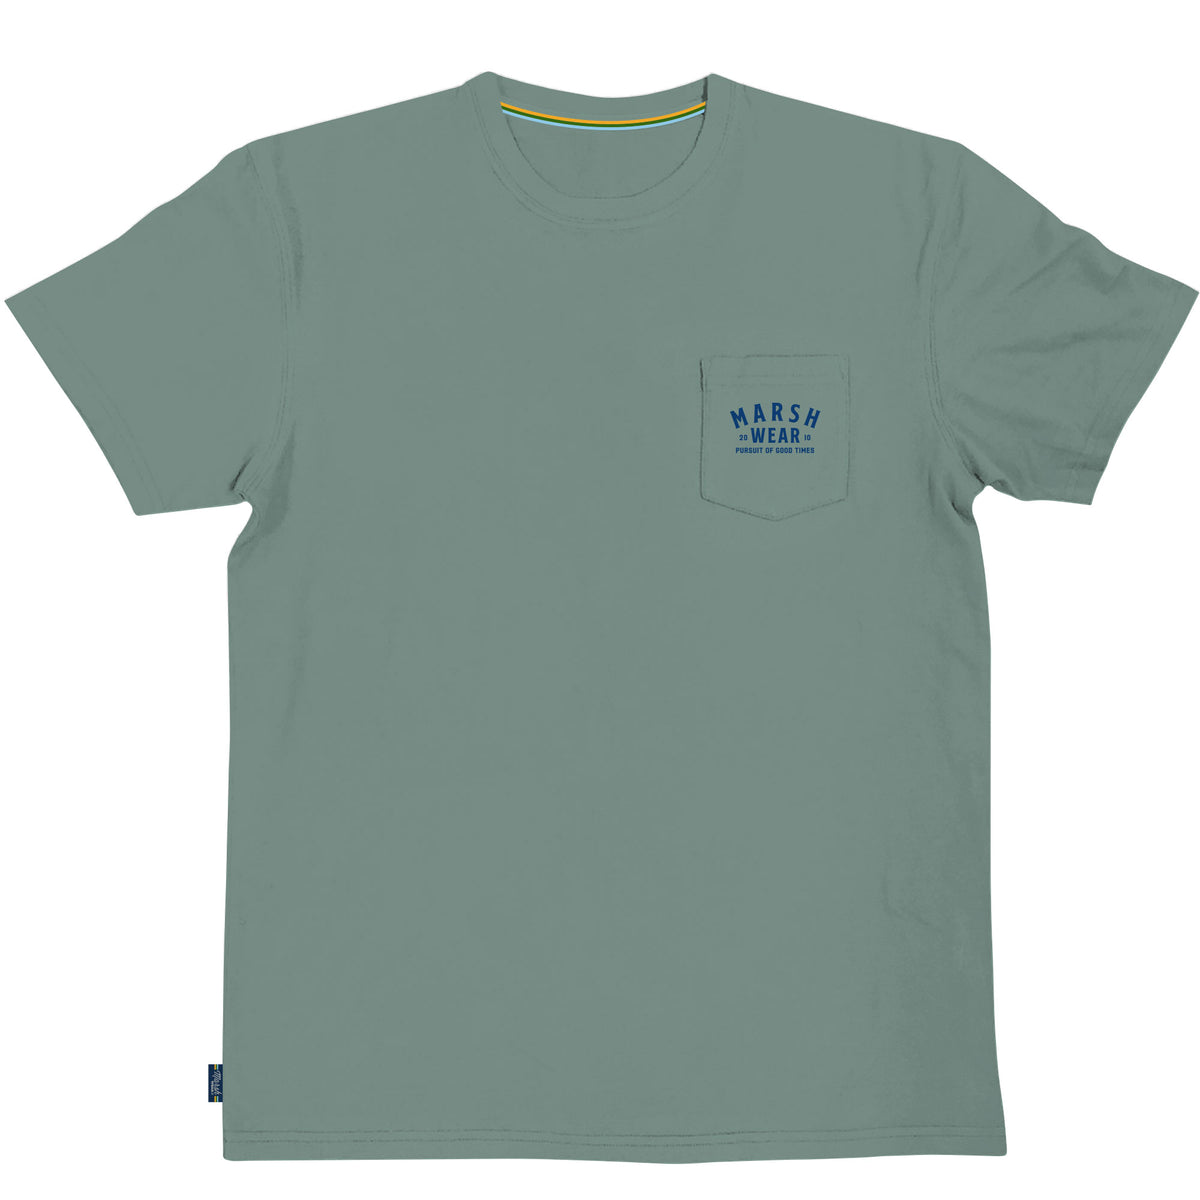 Marsh Wear Alton Camo Short Sleeve T-Shirt